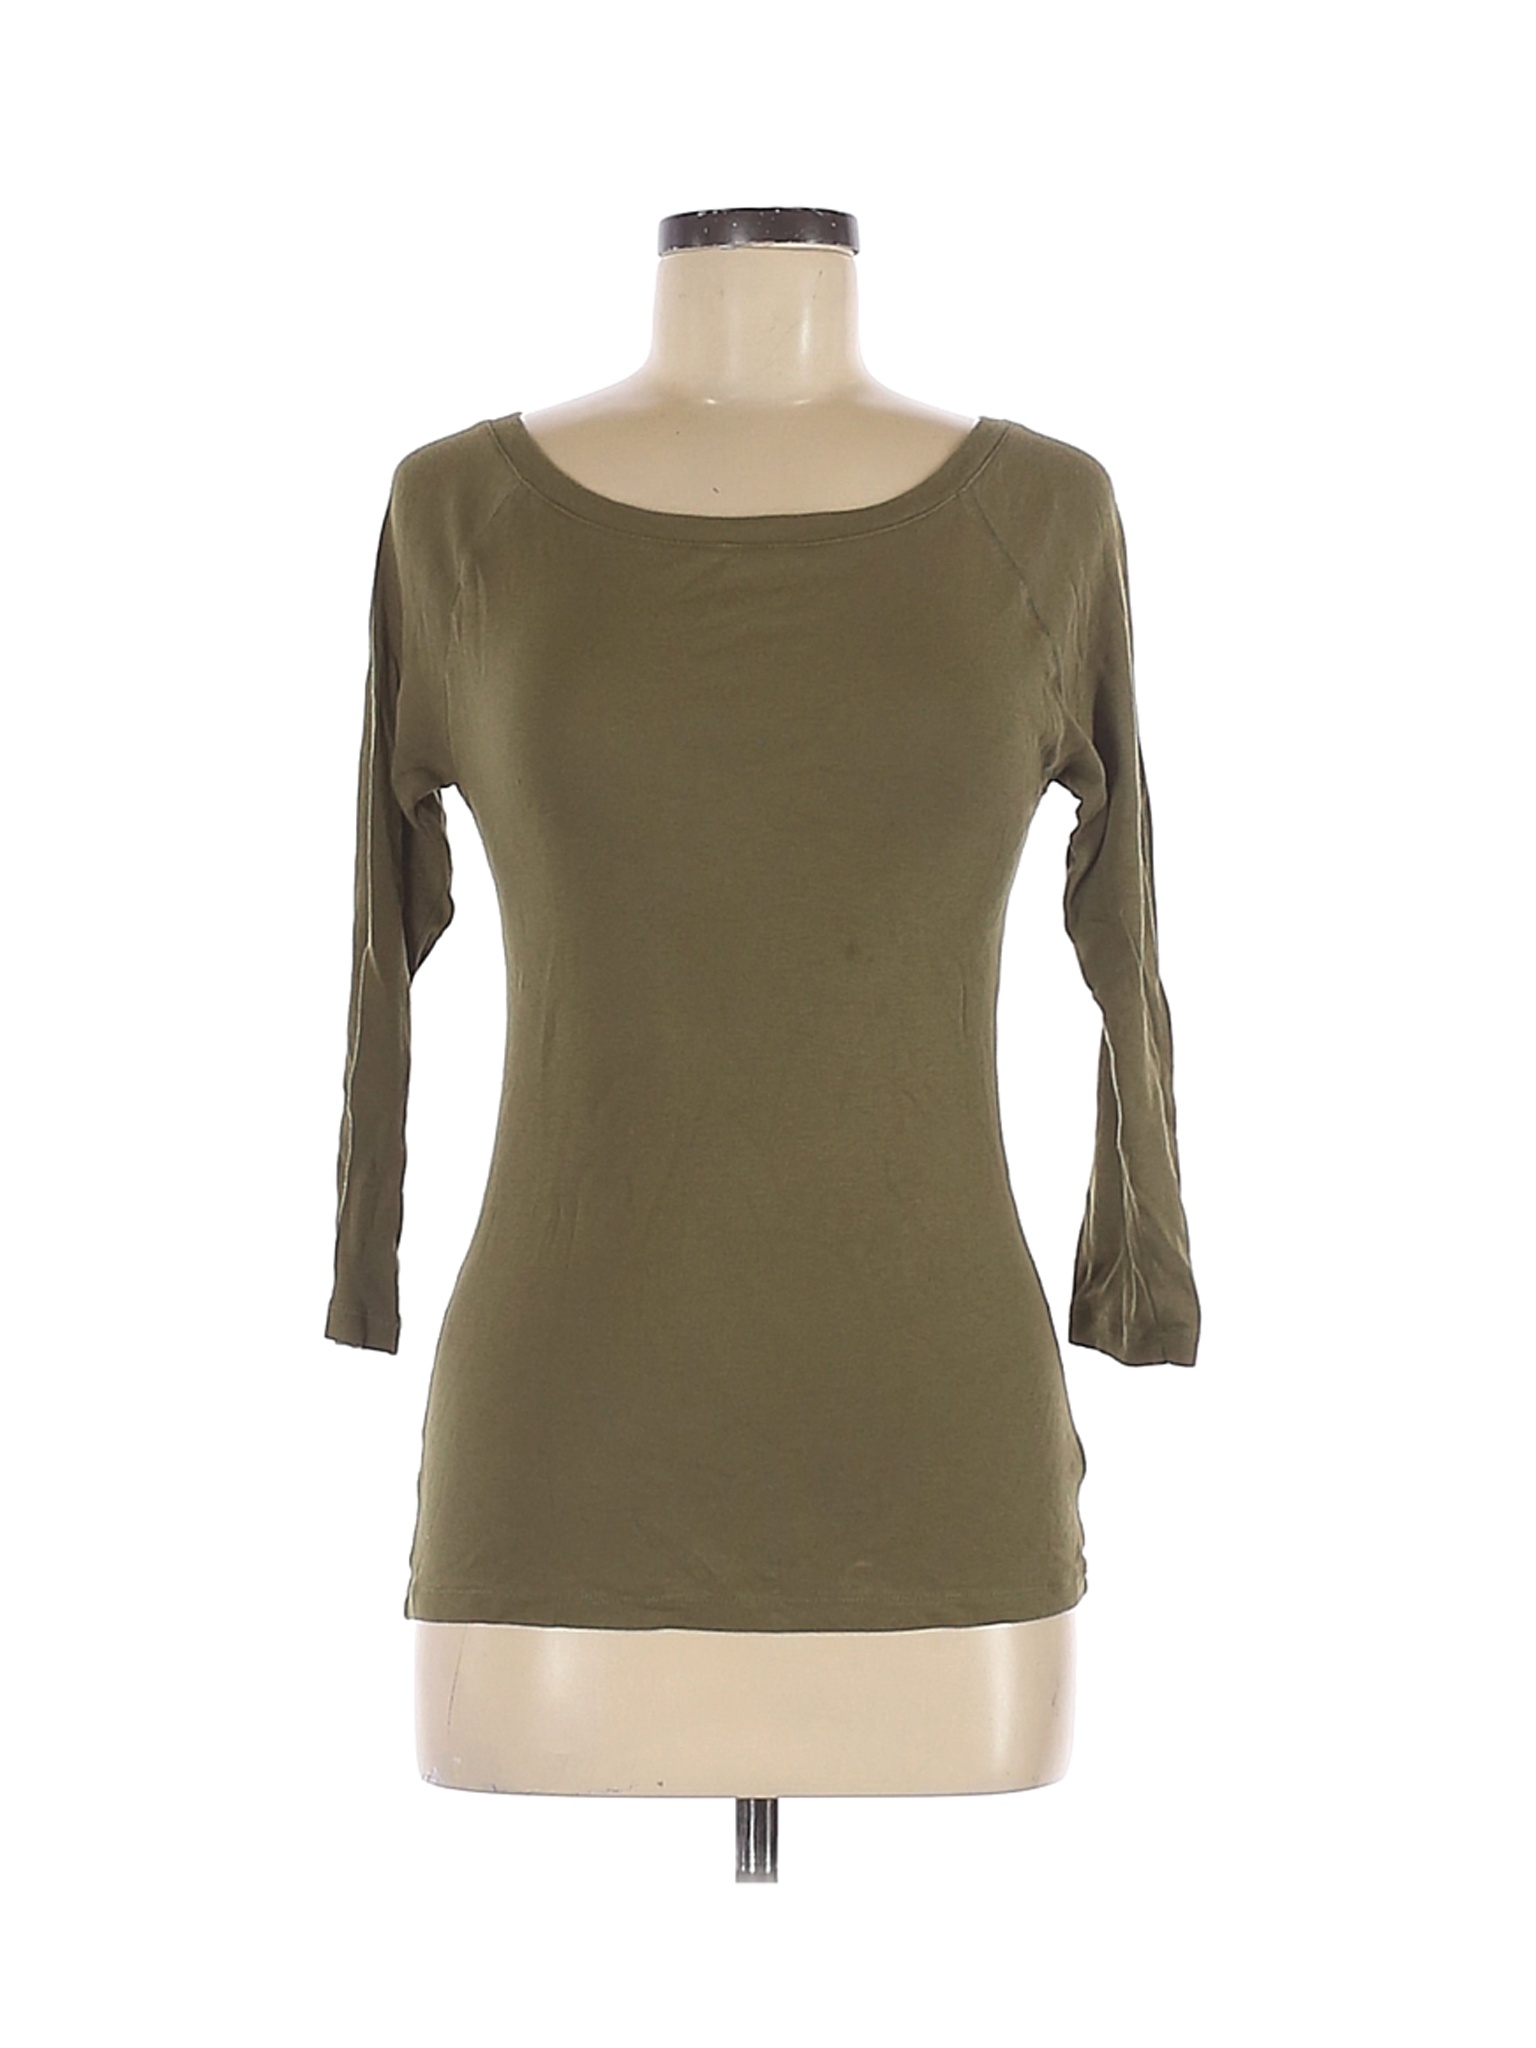 Gap Women Green 3/4 Sleeve T-Shirt M | eBay